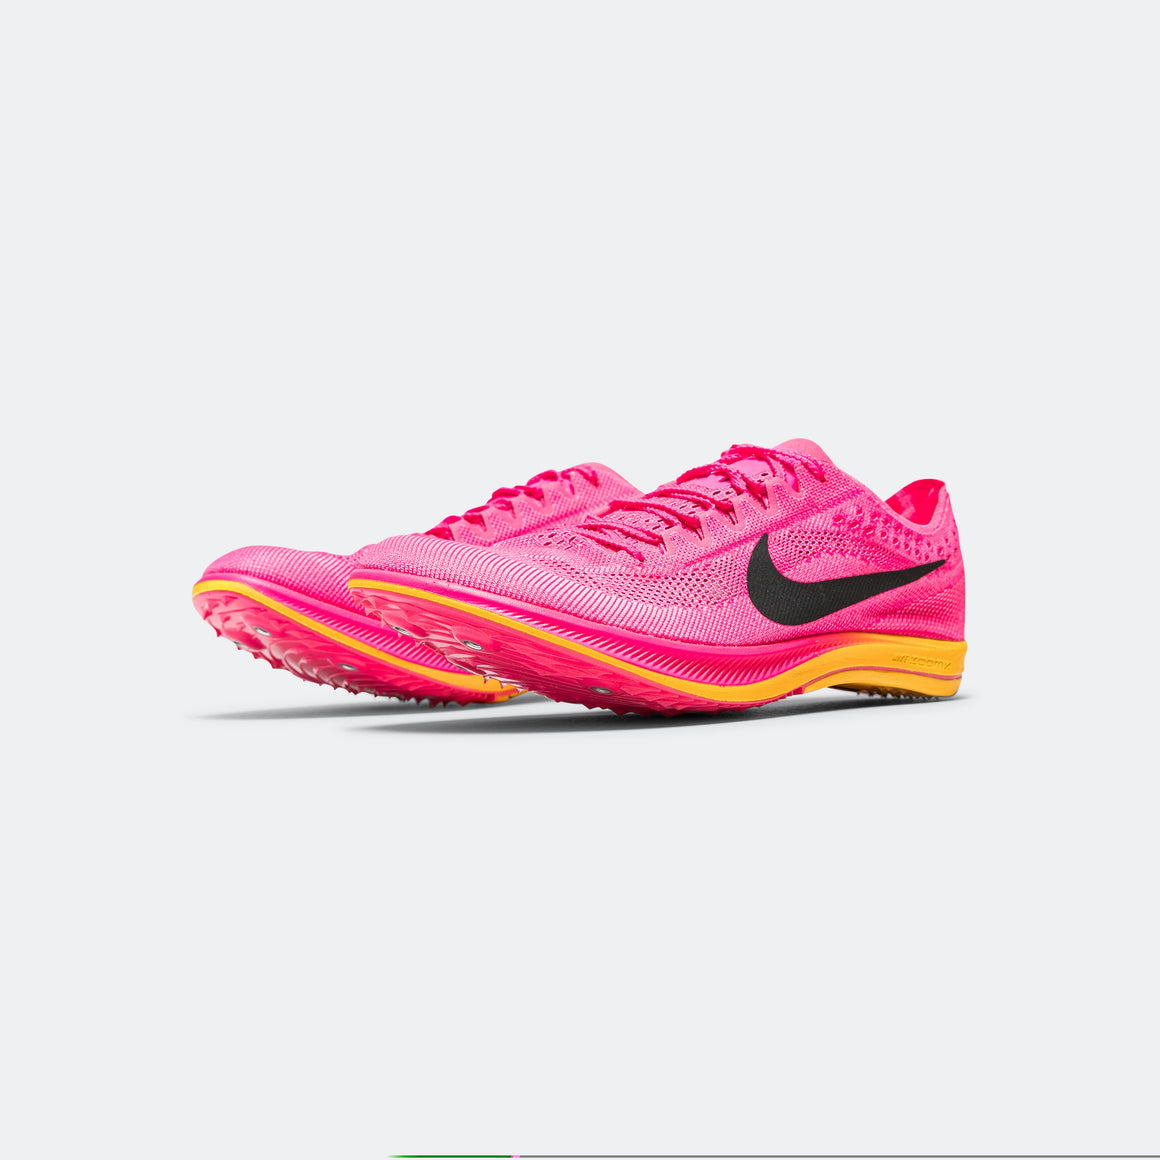 Nike - ZoomX Dragonfly - Hyper Pink/Black-Laser Orange - Up There Athletics